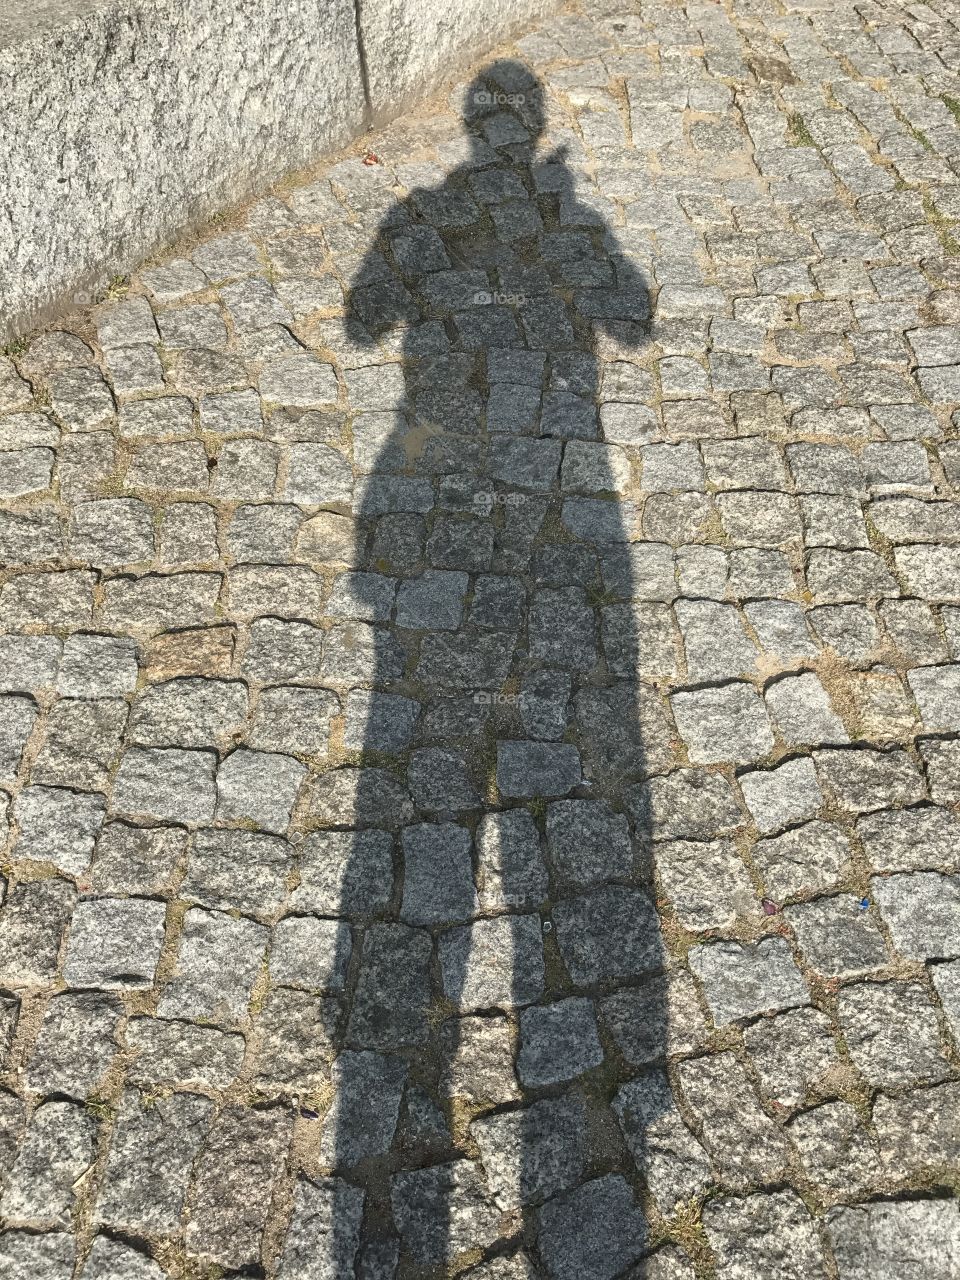 Man shadow